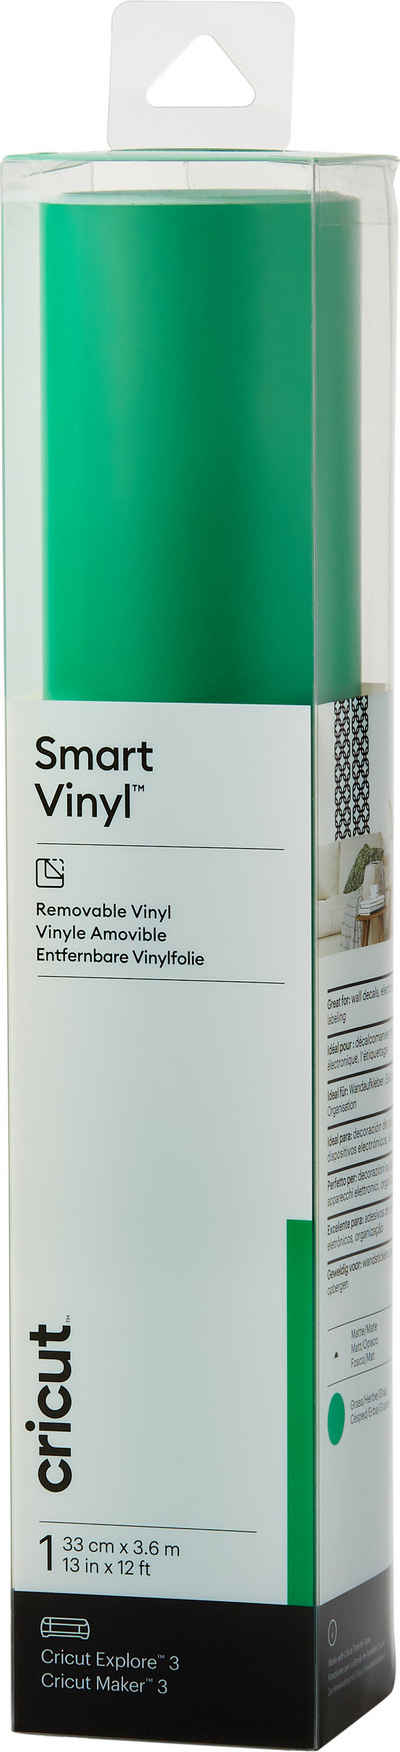 Cricut Dekorationsfolie Vinylfolie Smart Vinyl Removable, selbstklebend 360 cm x 33 cm